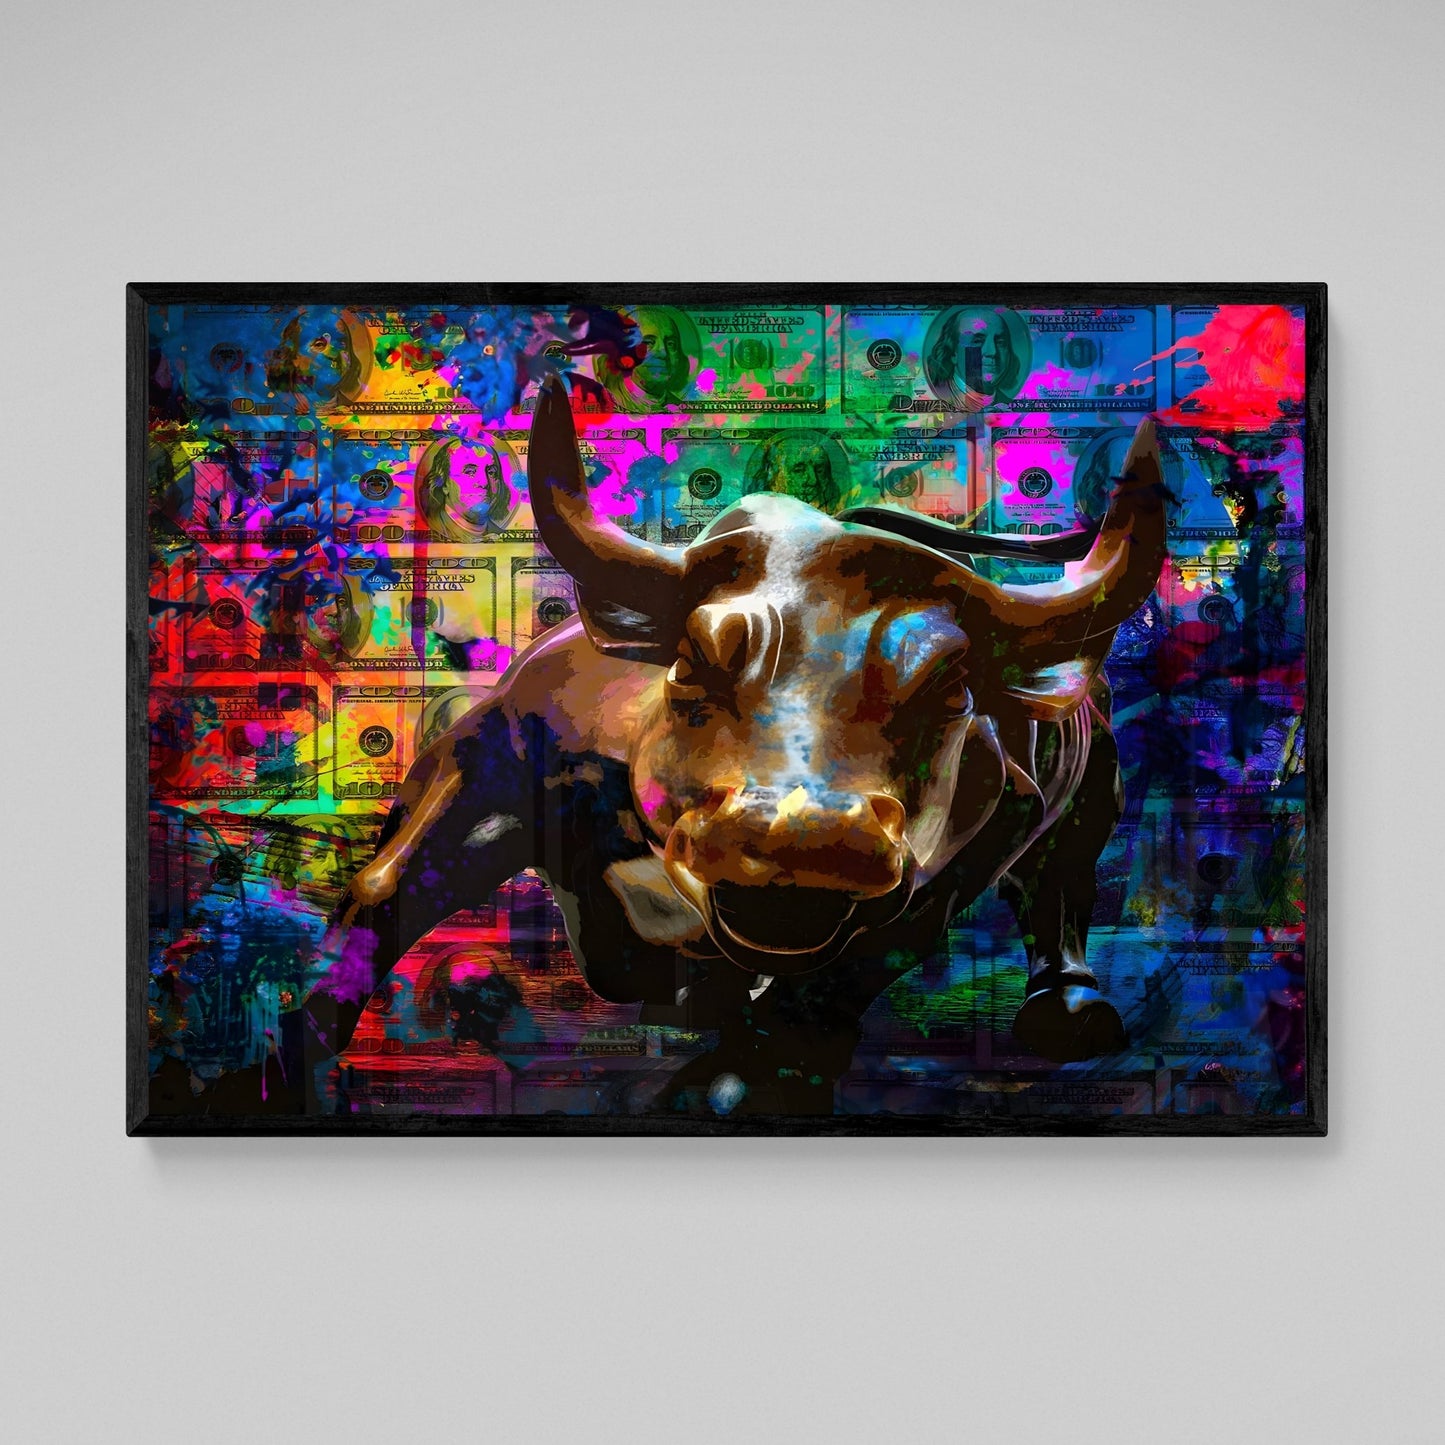 Cuadro Pop Art Wall Street - La Casa Del Cuadro